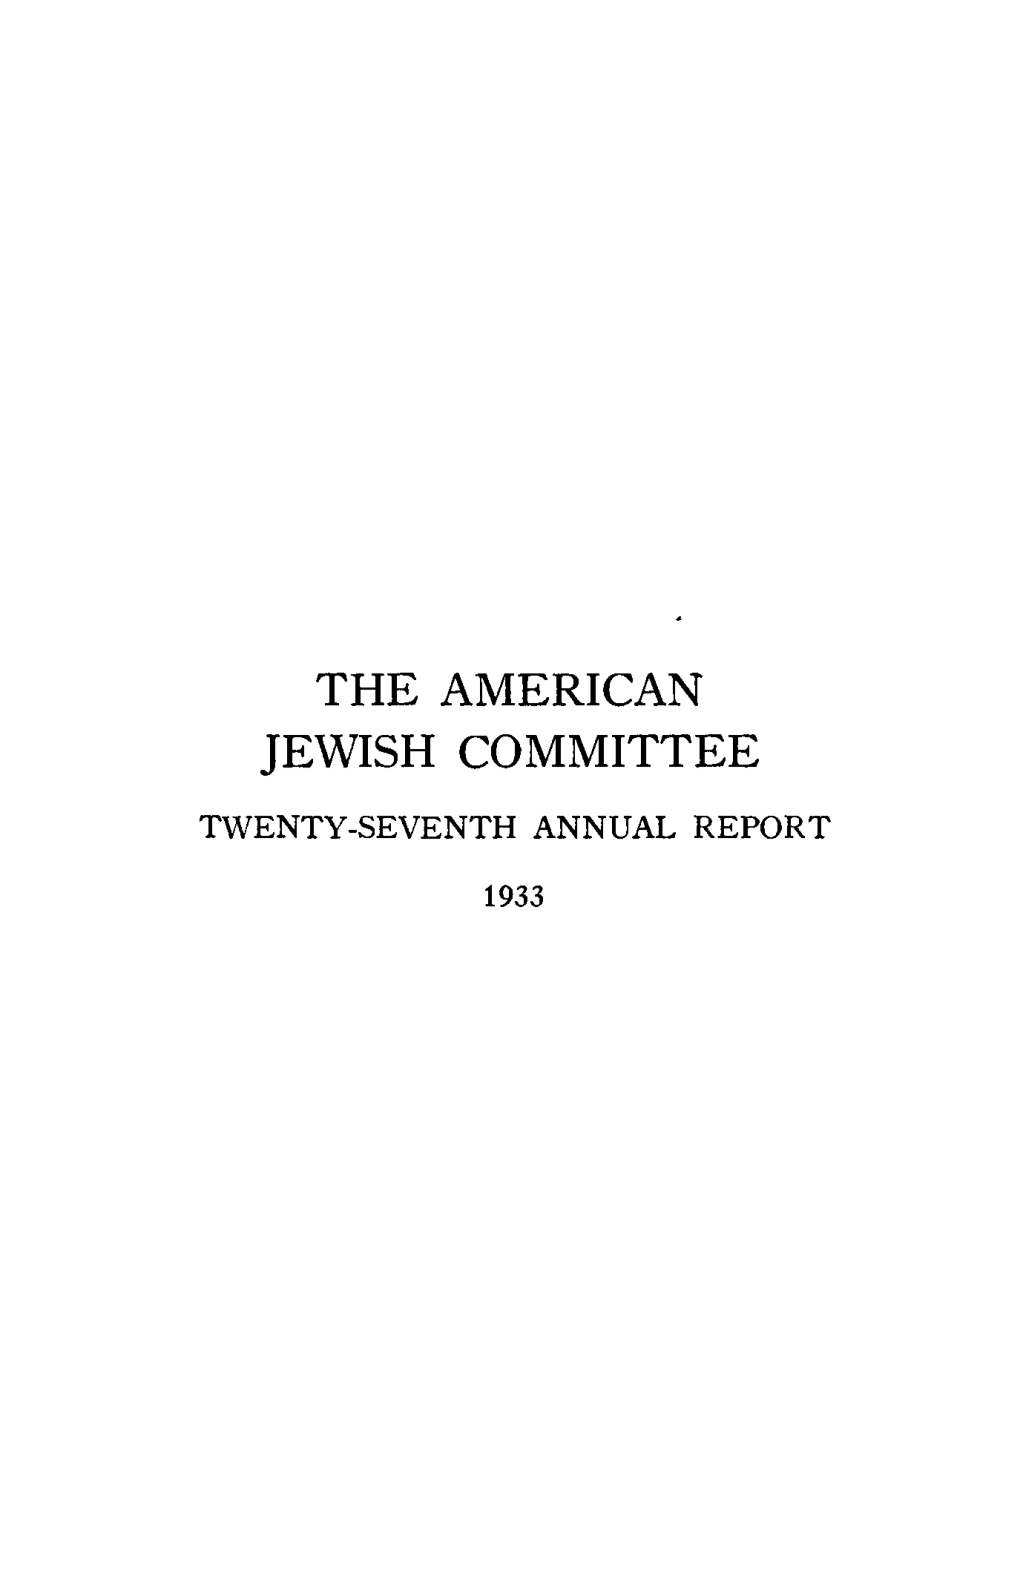 The American Jewish Committee Twenty-Seventh Annual Report